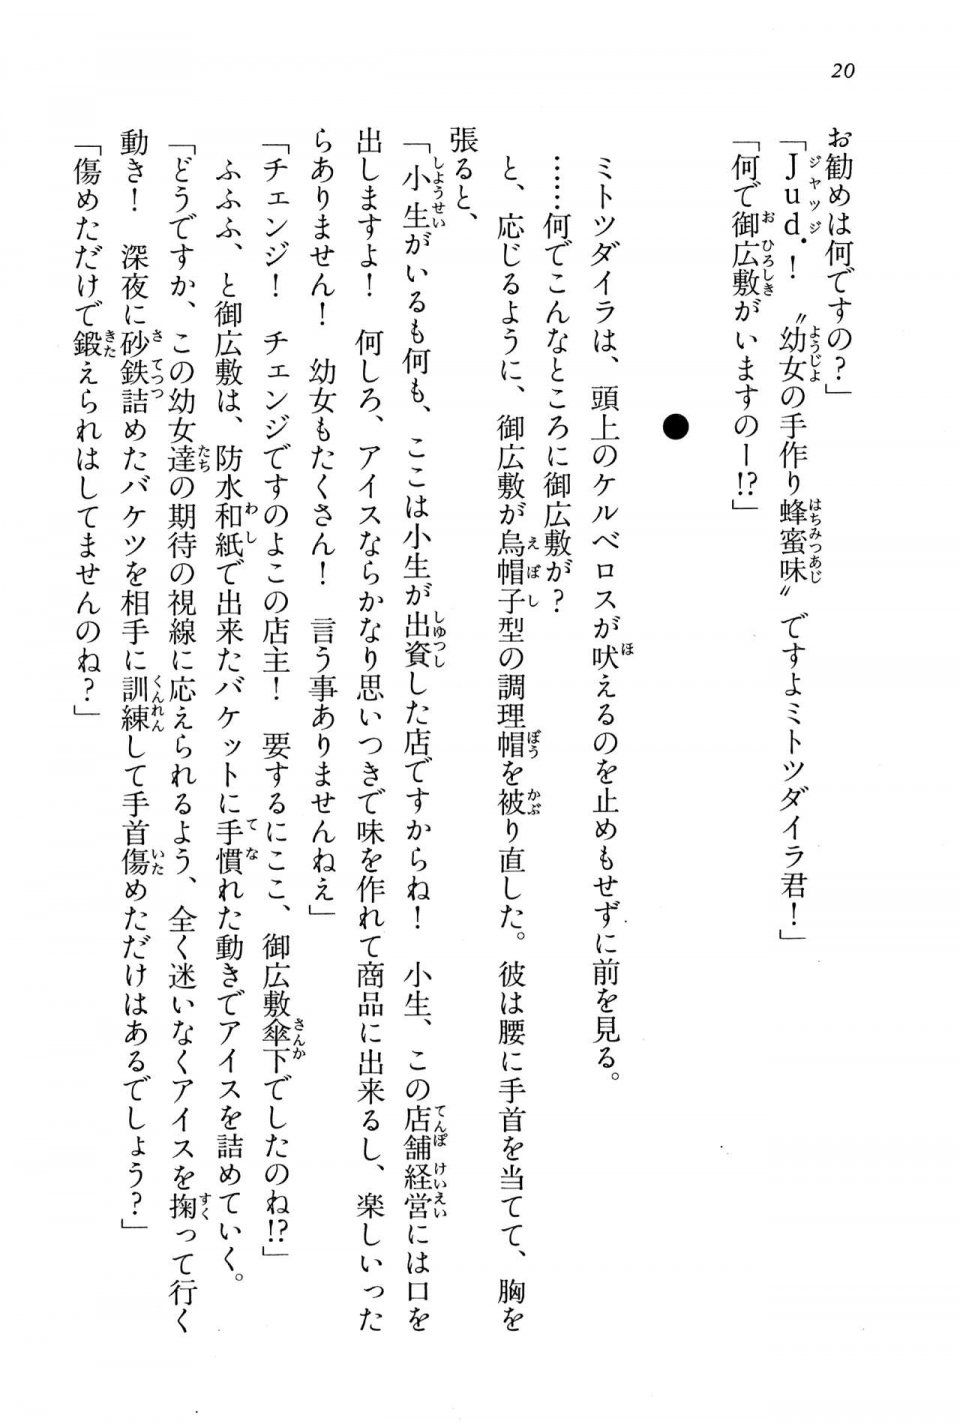 Kyoukai Senjou no Horizon BD Special Mininovel Vol 3(2A) - Photo #24